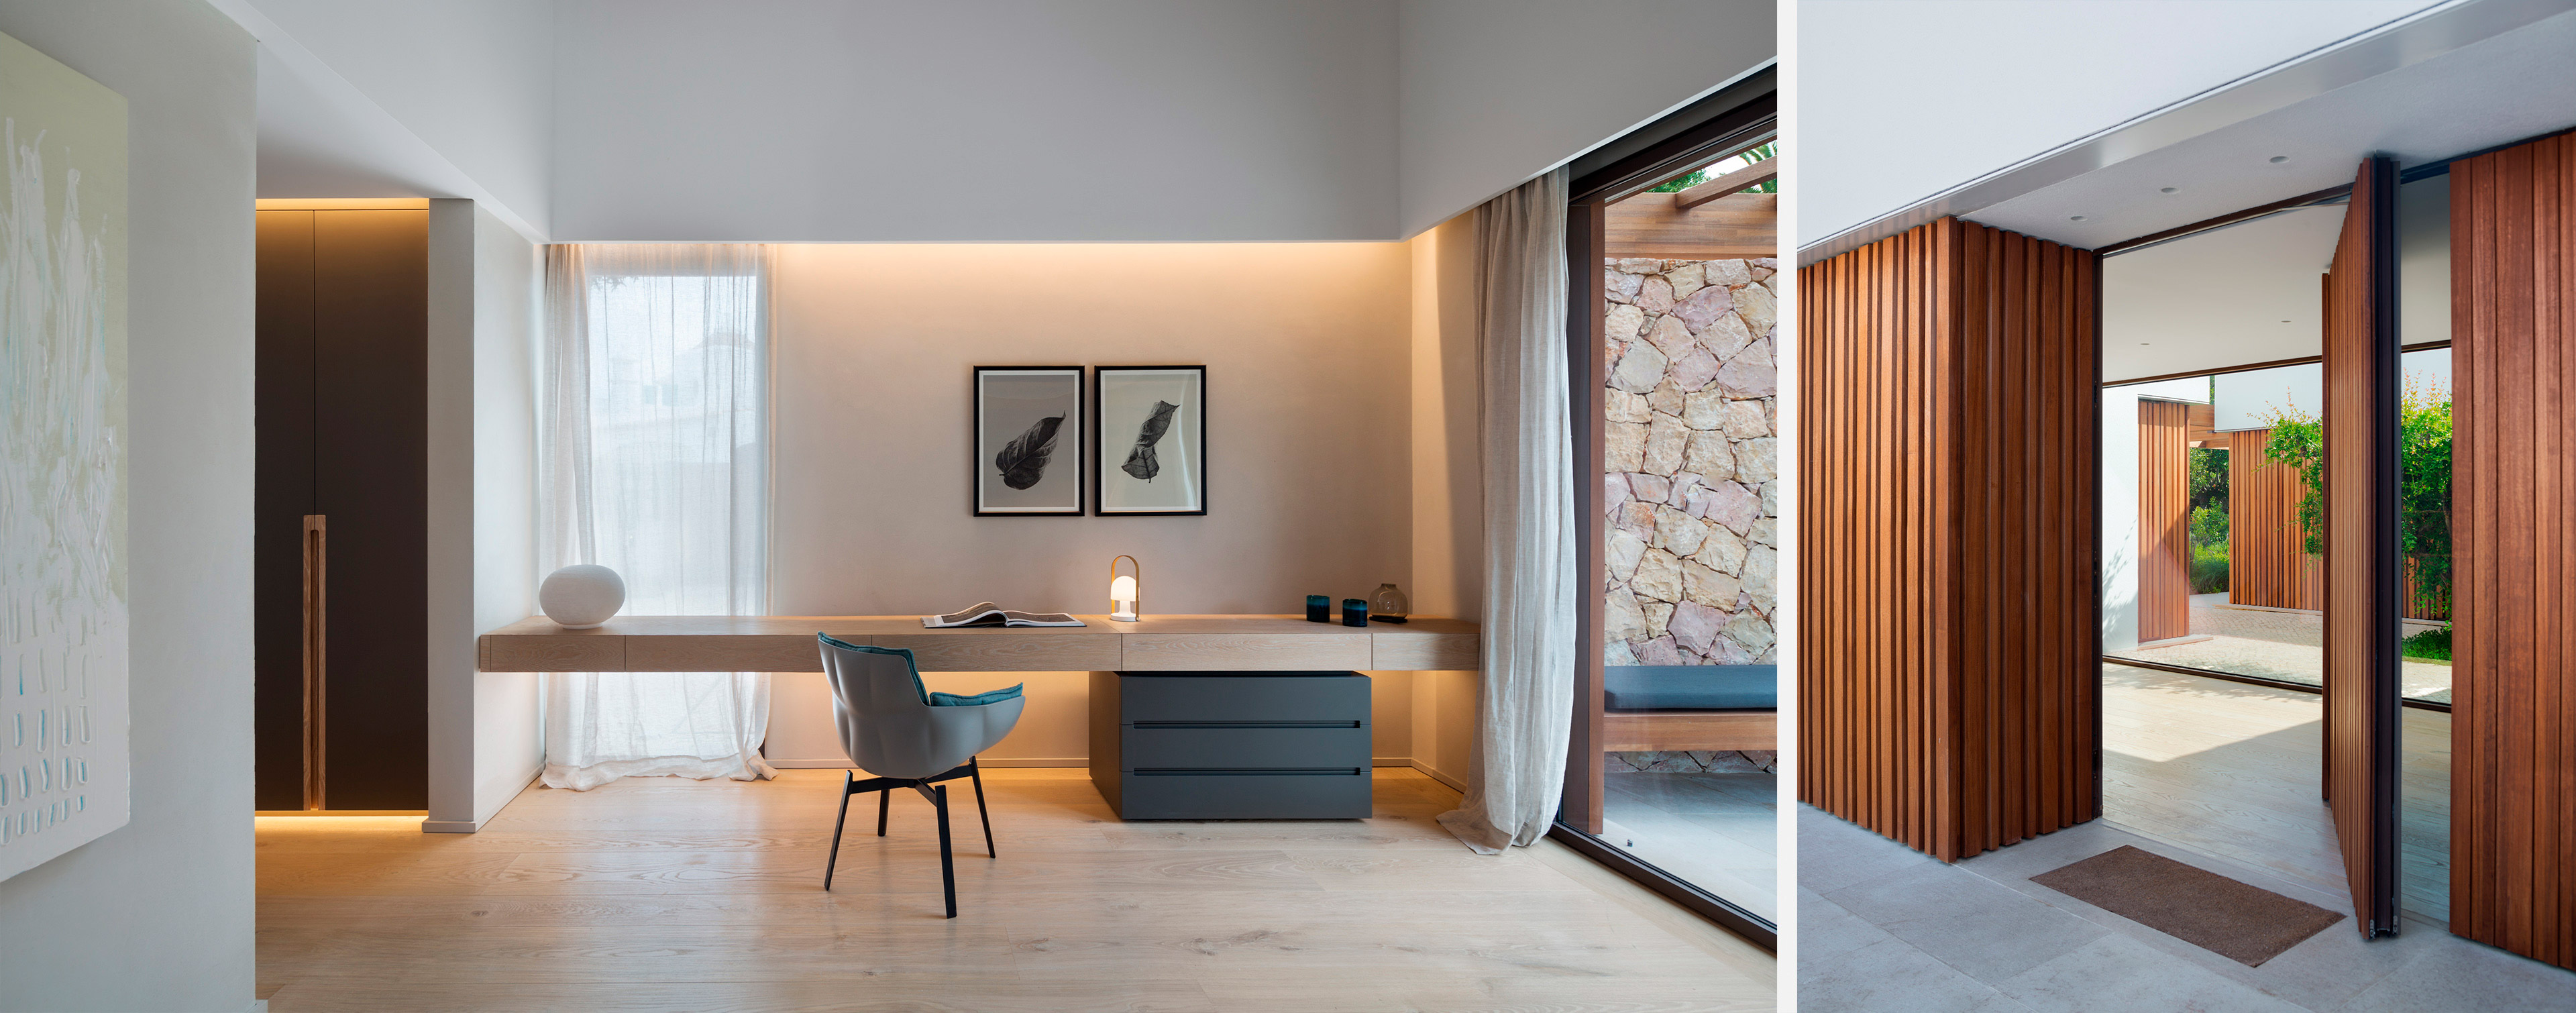 luv studio luxury architects algarve da rocha house IMG 04 - CASA DA ROCHA